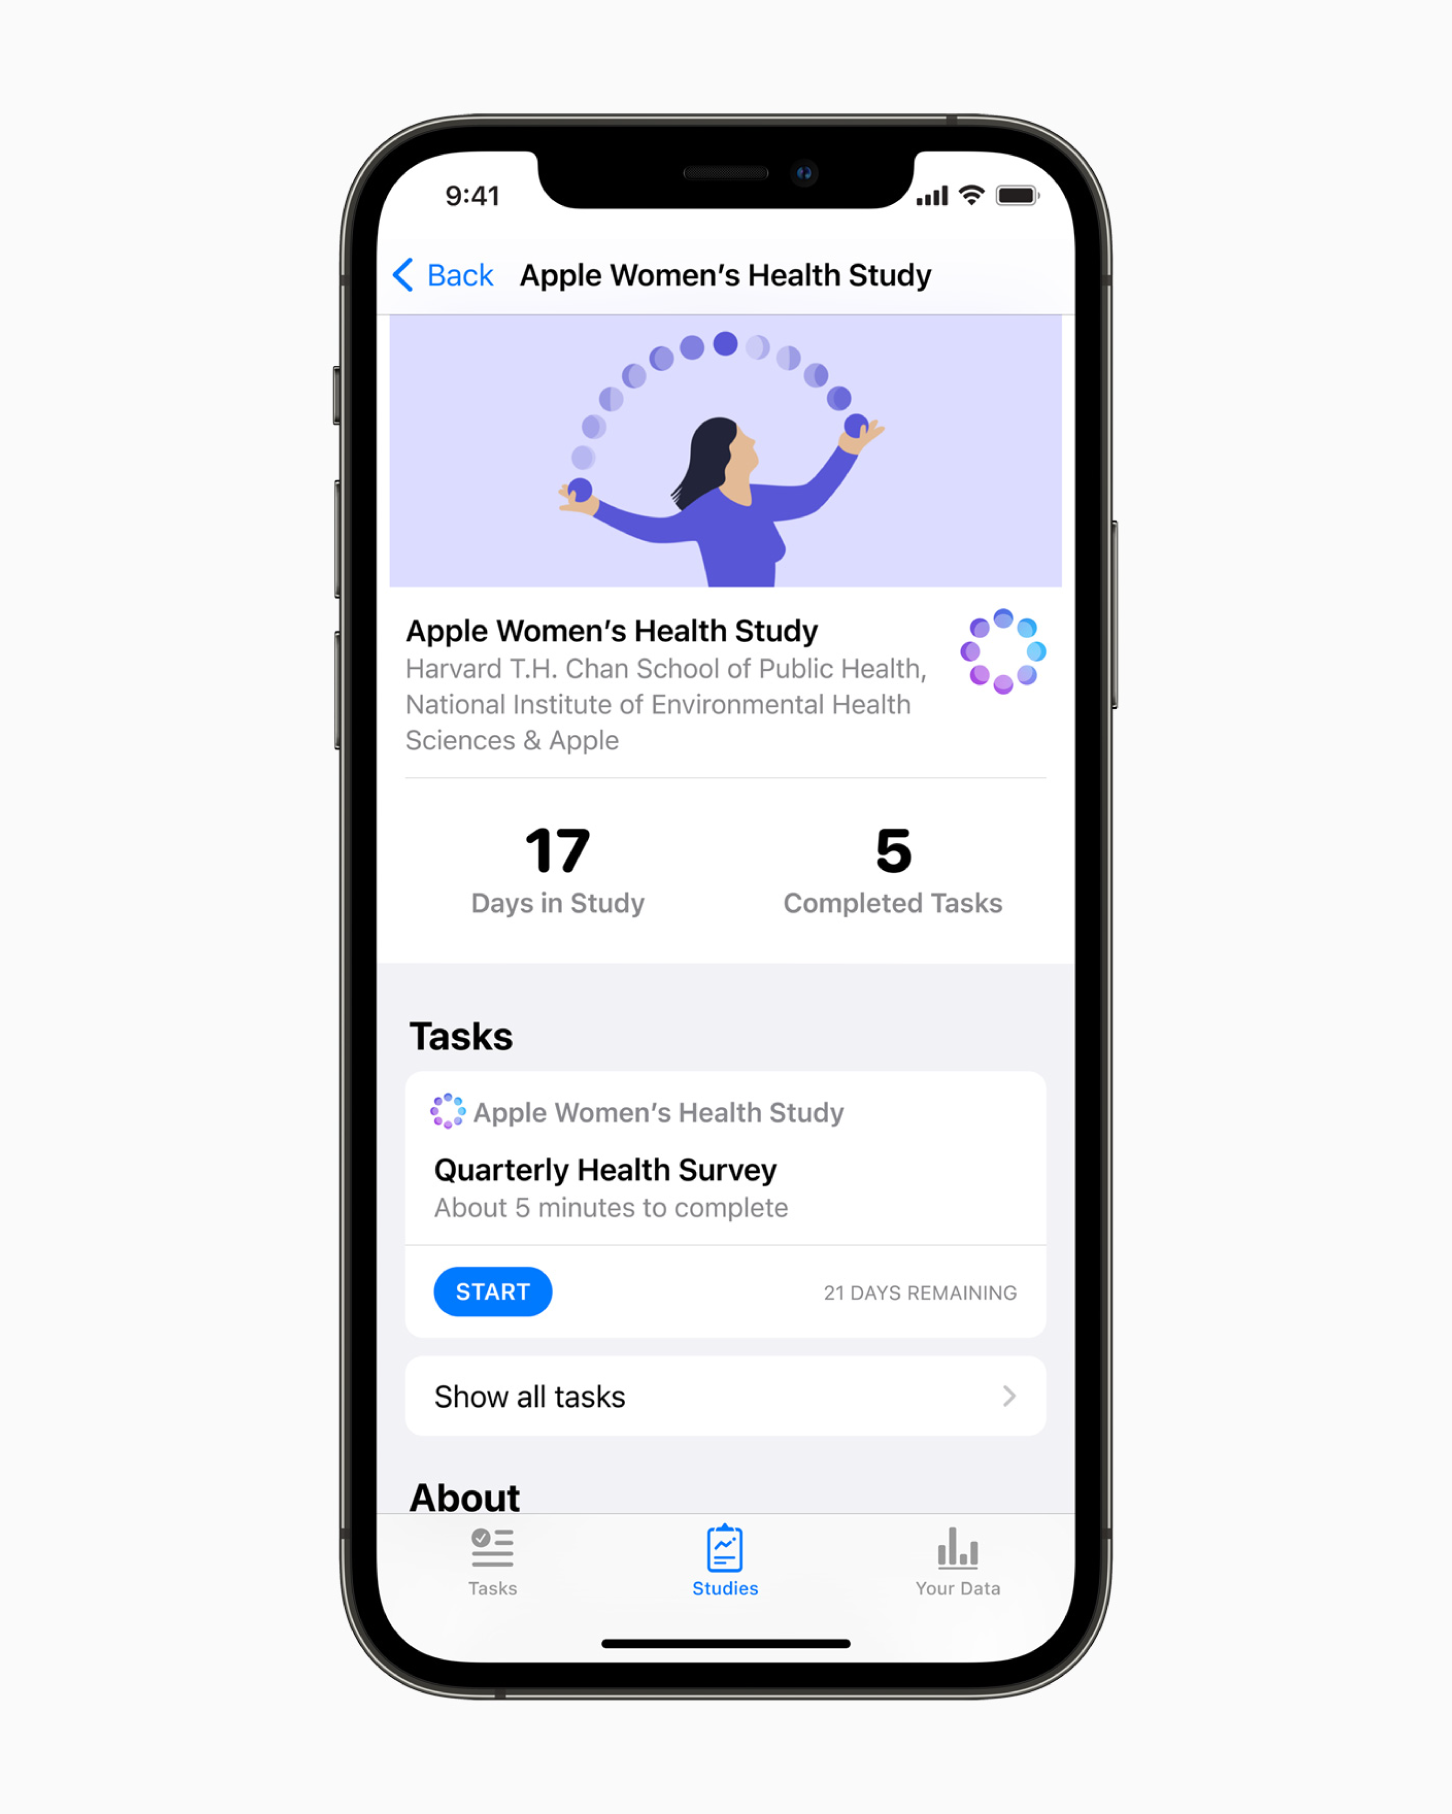 Apple Women's Health Study on iPhone